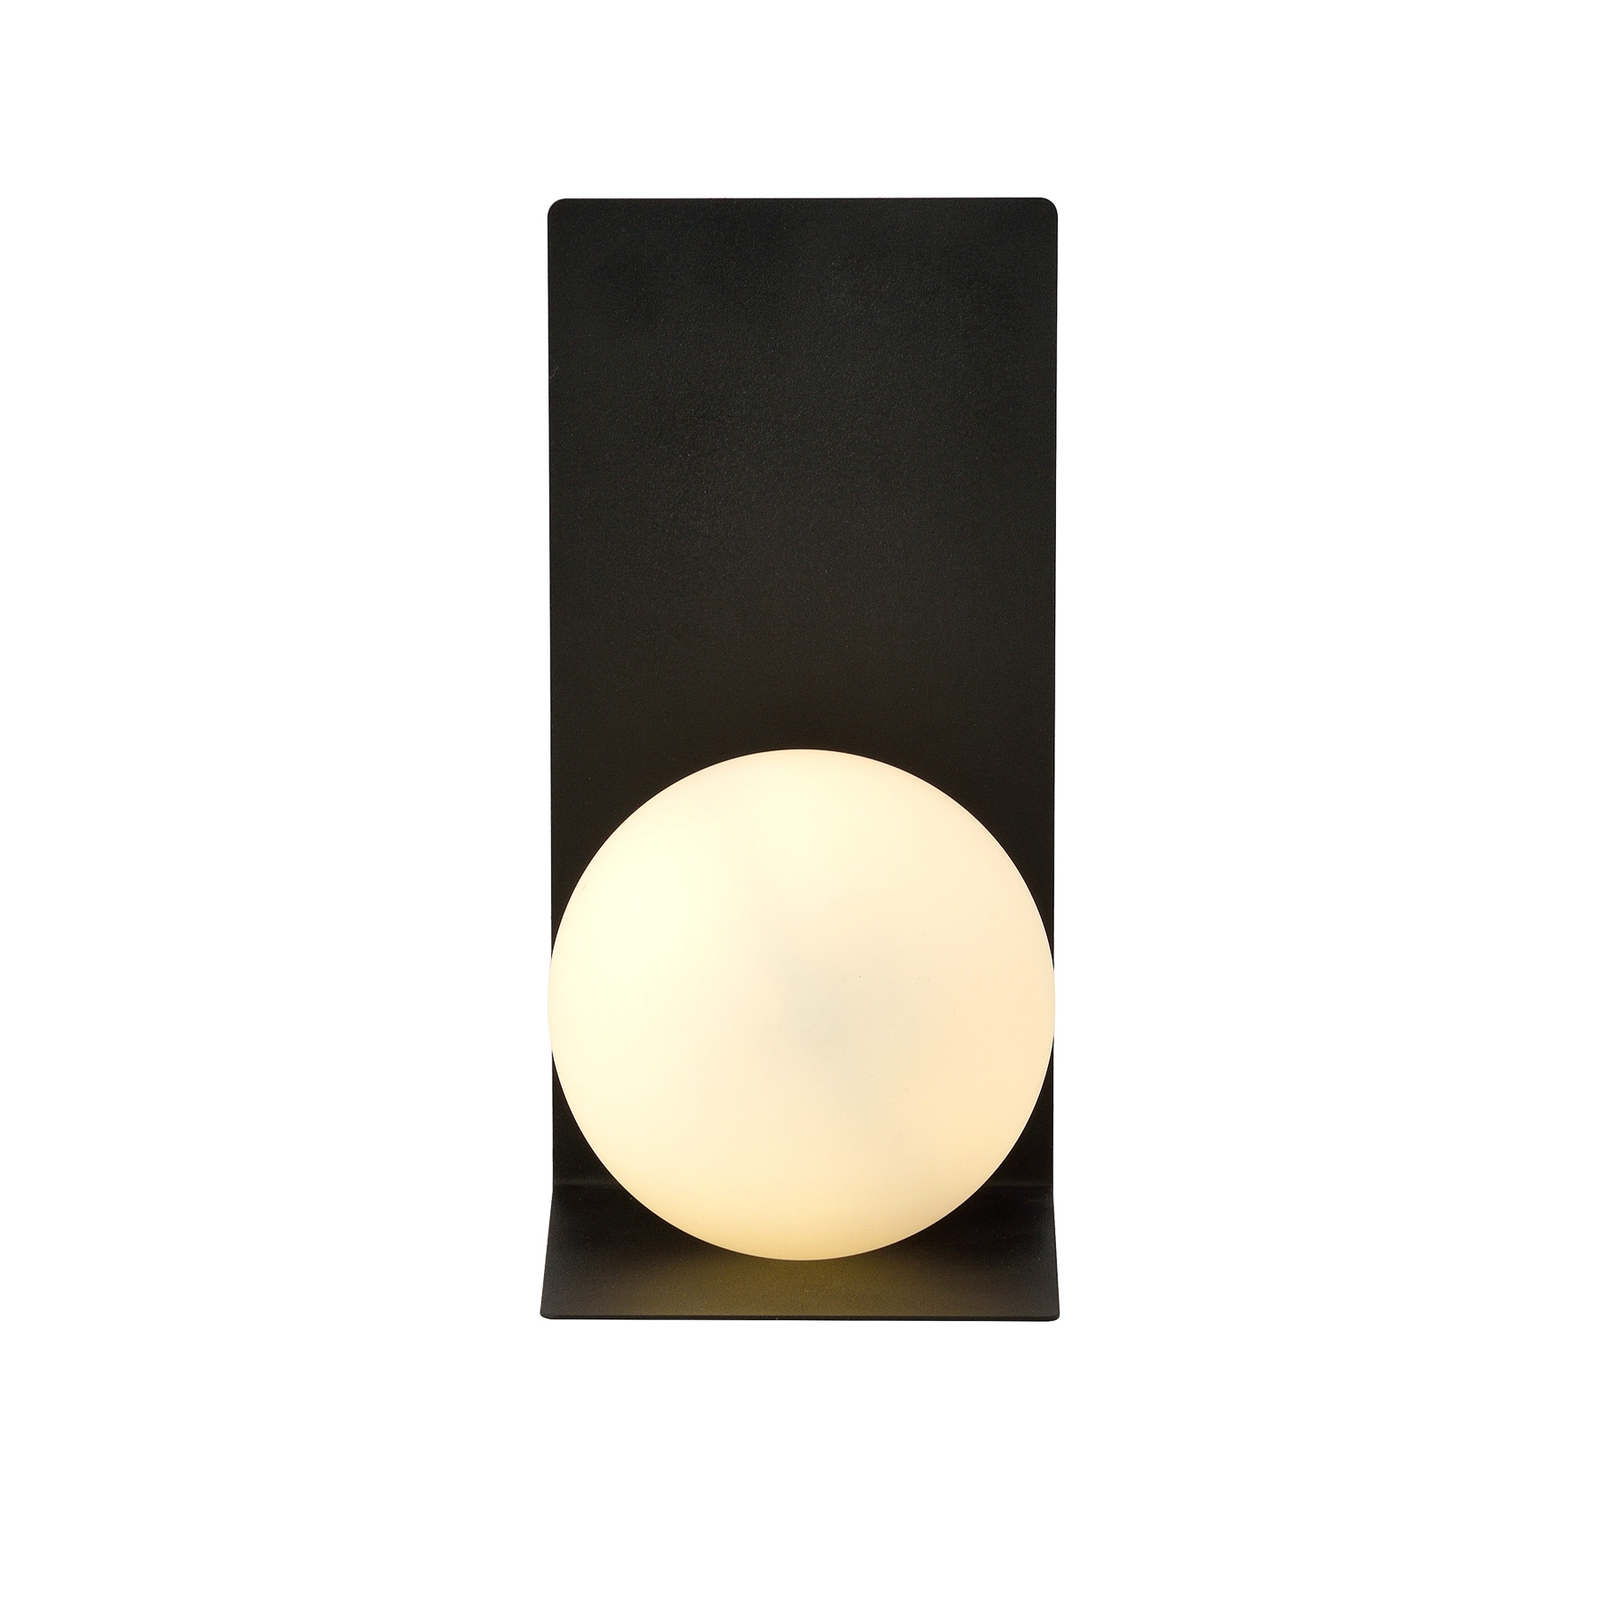 Form 5 wall lamp, 15 cm x 30 cm, black/opal